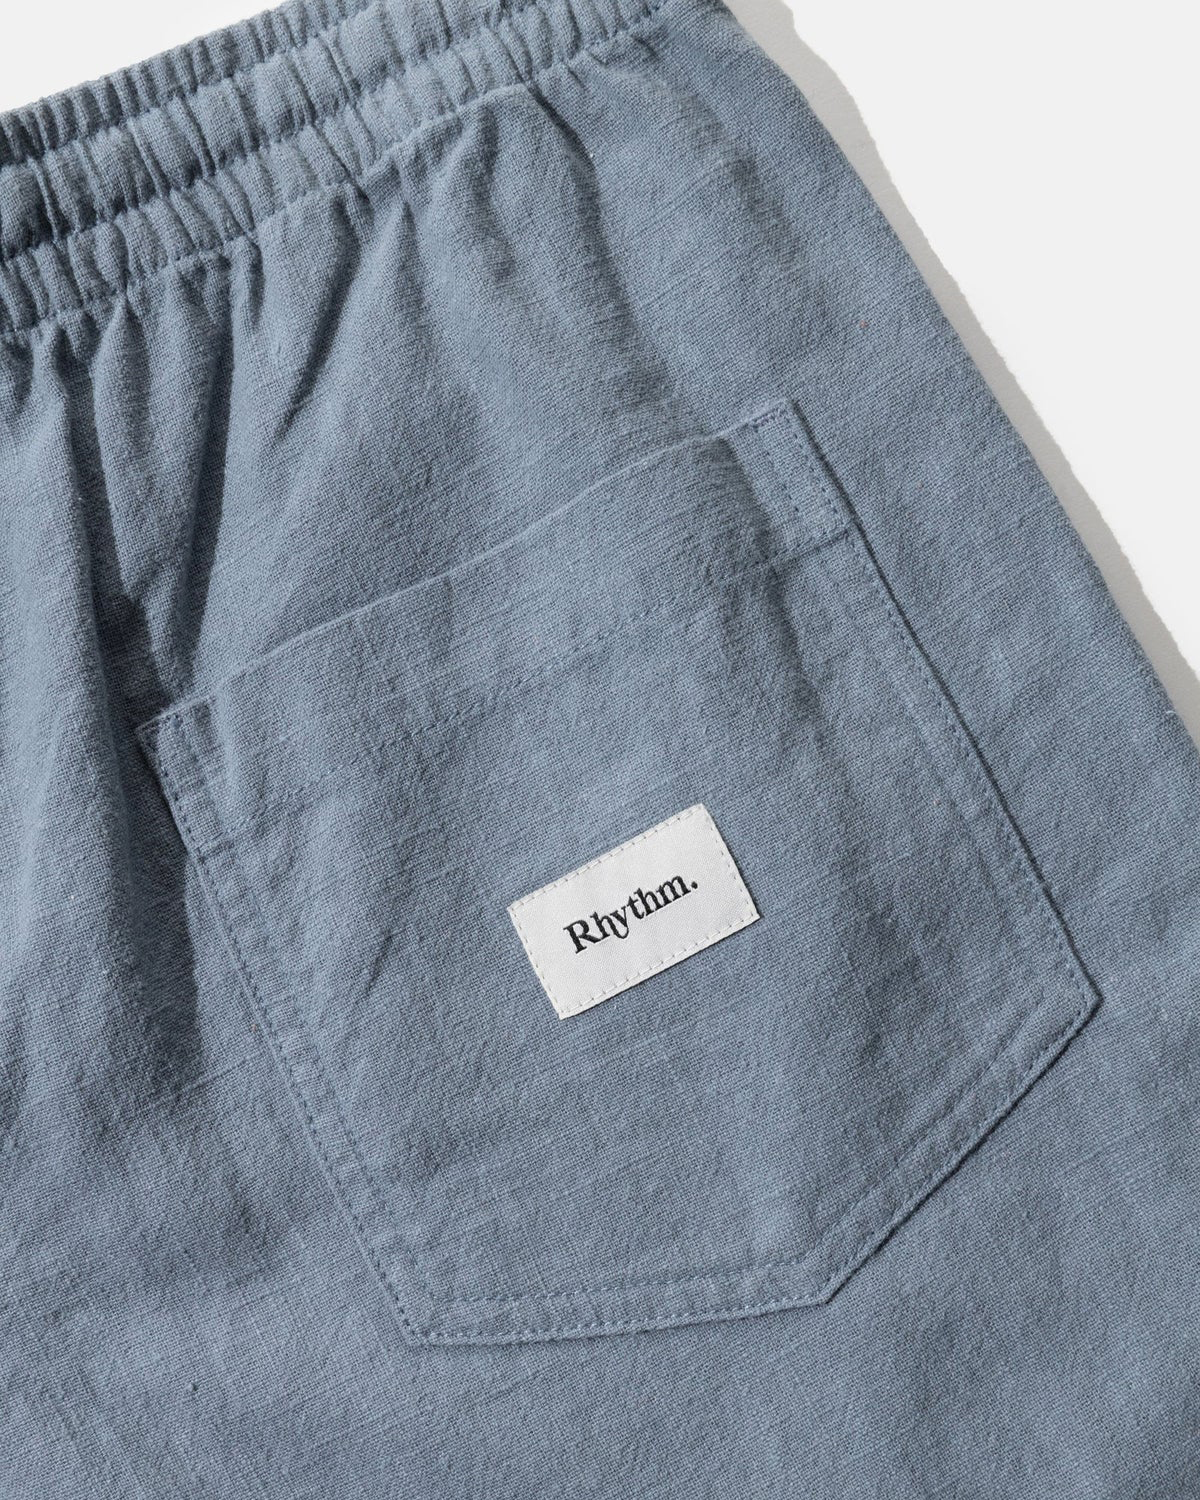 Shorts Textured Linen Jam - Slate - 34